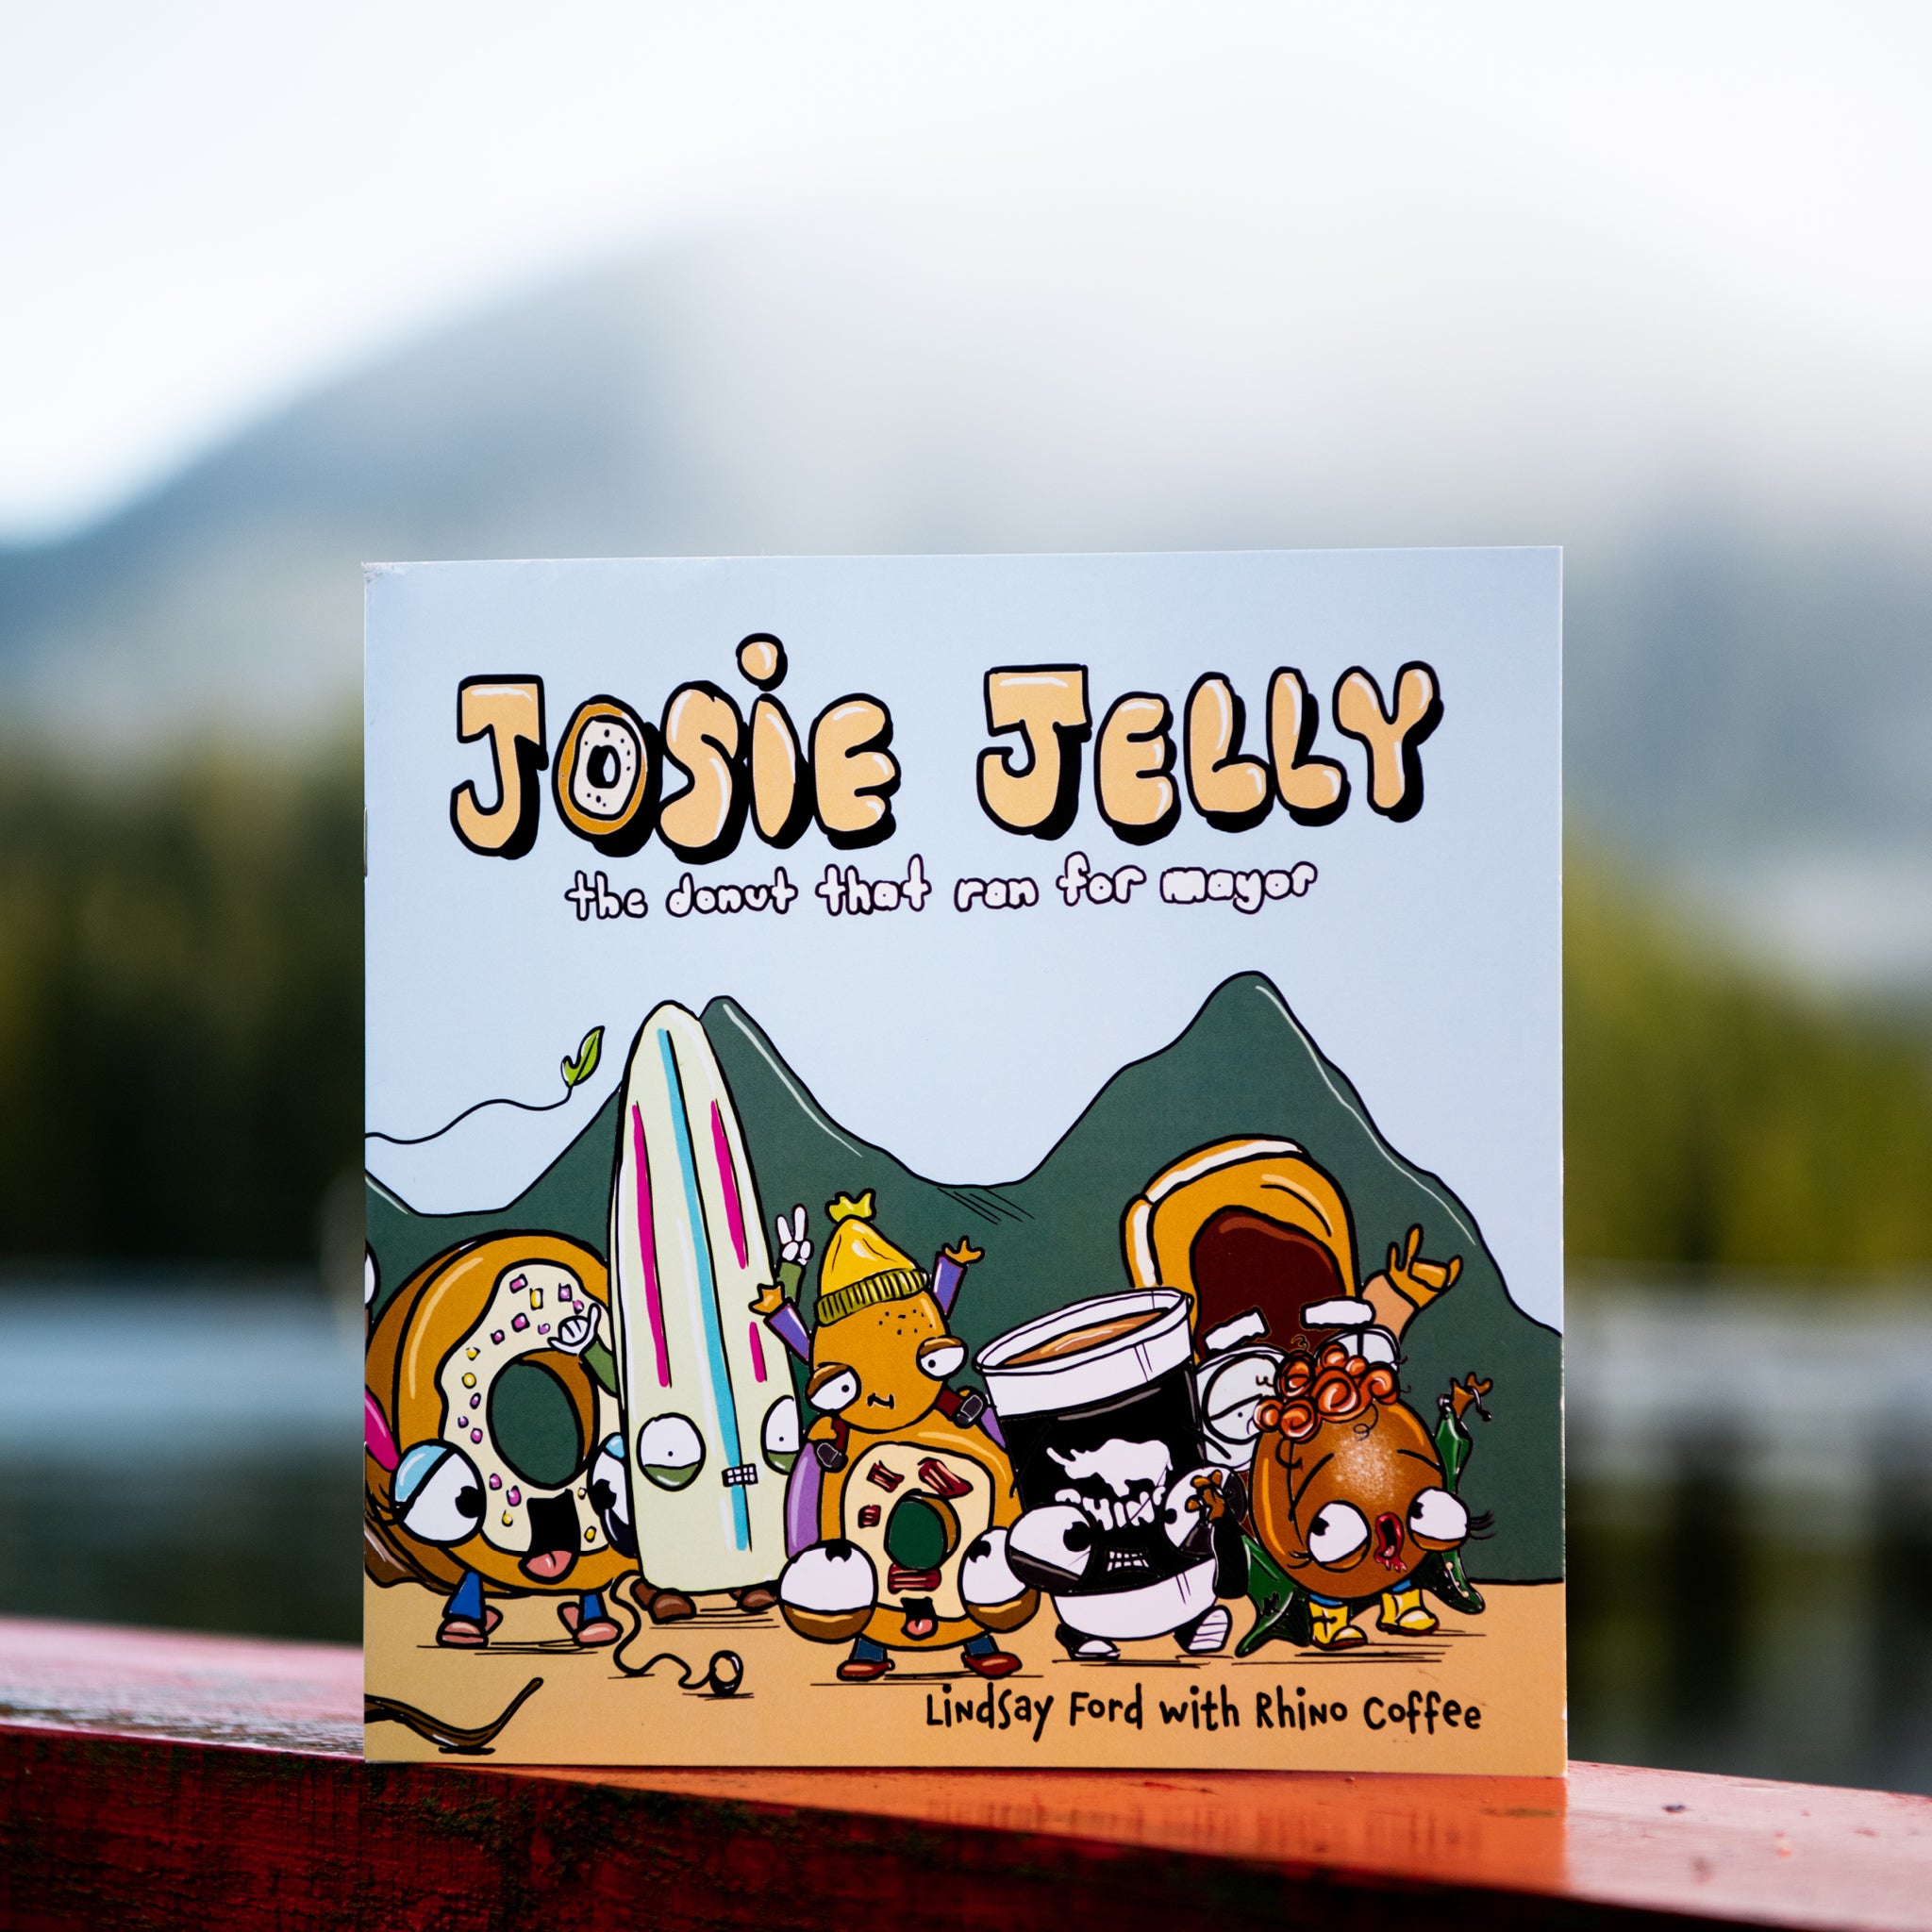 Josie Jelly "The Donut that ran for Mayor" children's book